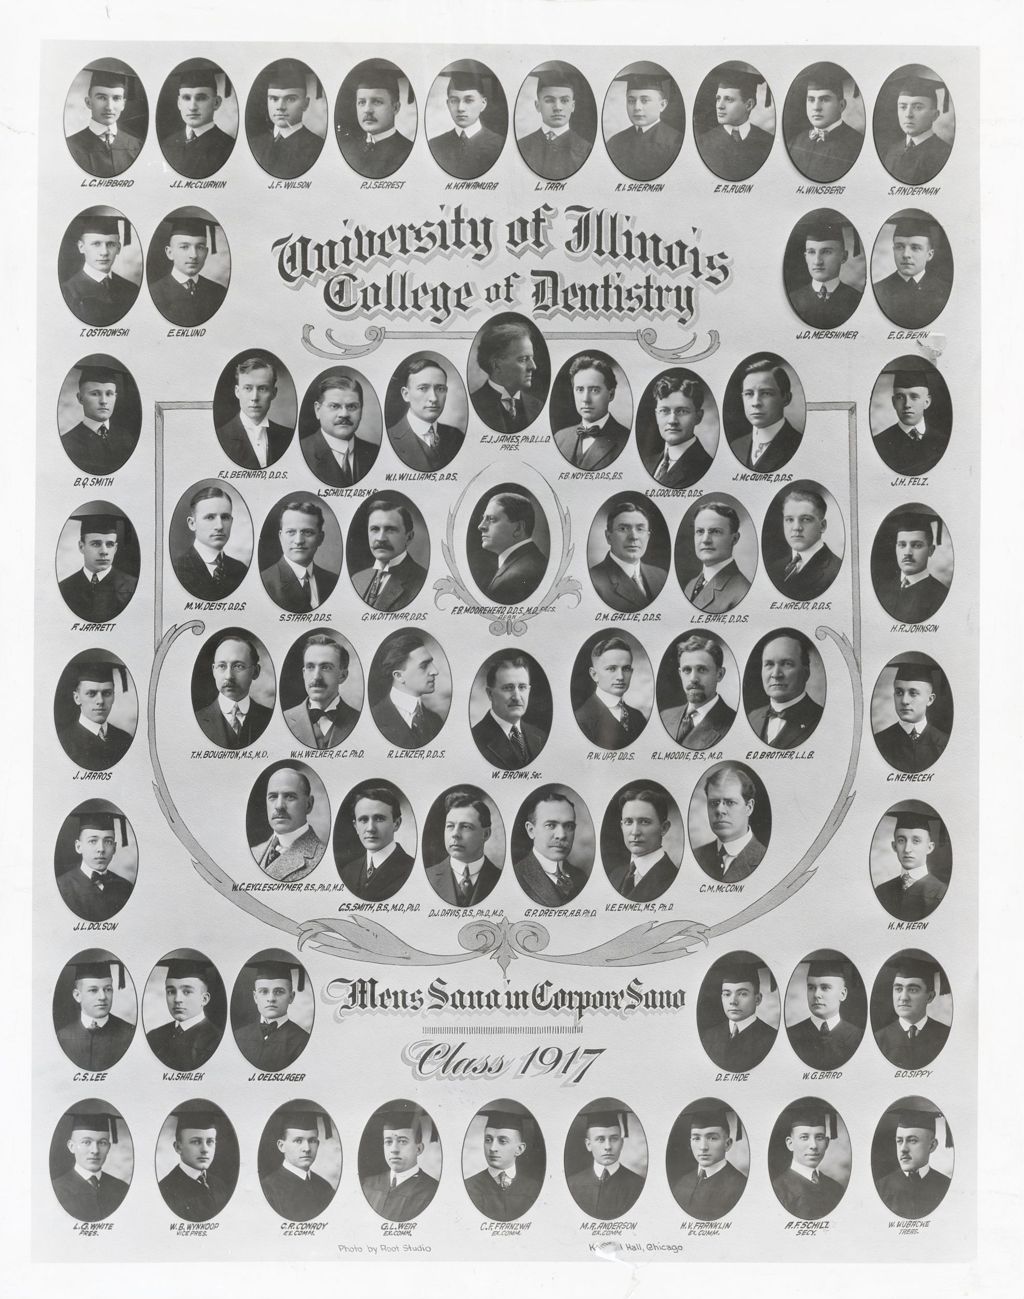 Miniature of 1917 graduating class, University of Illinois College of Dentistry